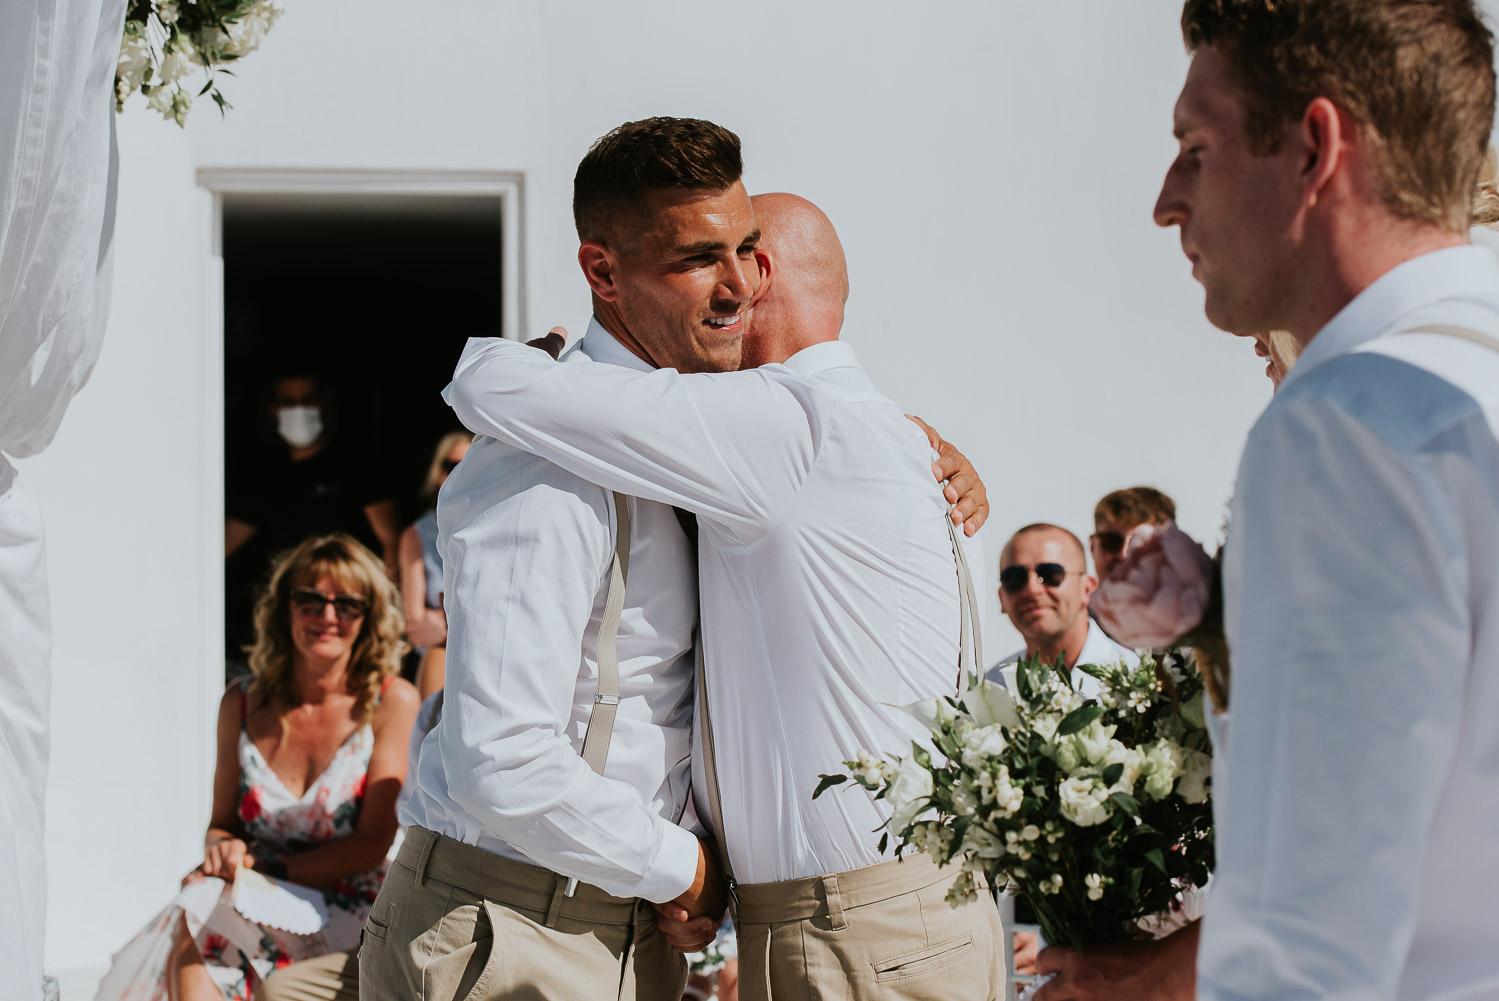 Wedding photographer Santorini: groom and bride's stepdad hug with guests around by Ben and Vesna.